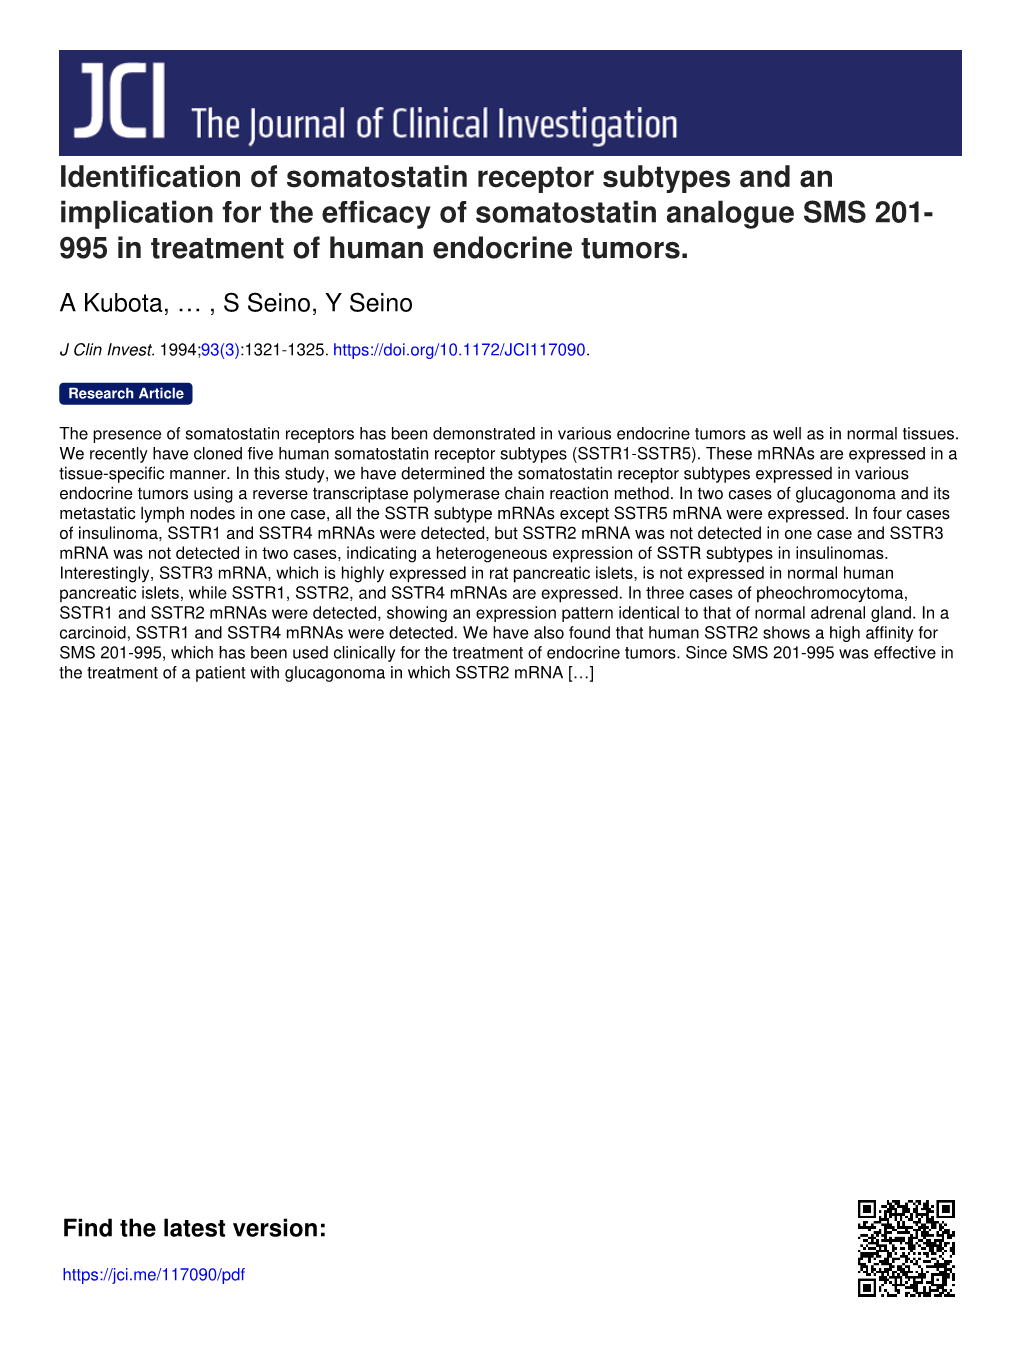 Identification of Somatostatin Receptor Subtypes and an Implication for the Efficacy of Somatostatin Analogue SMS 201- 995 in Treatment of Human Endocrine Tumors